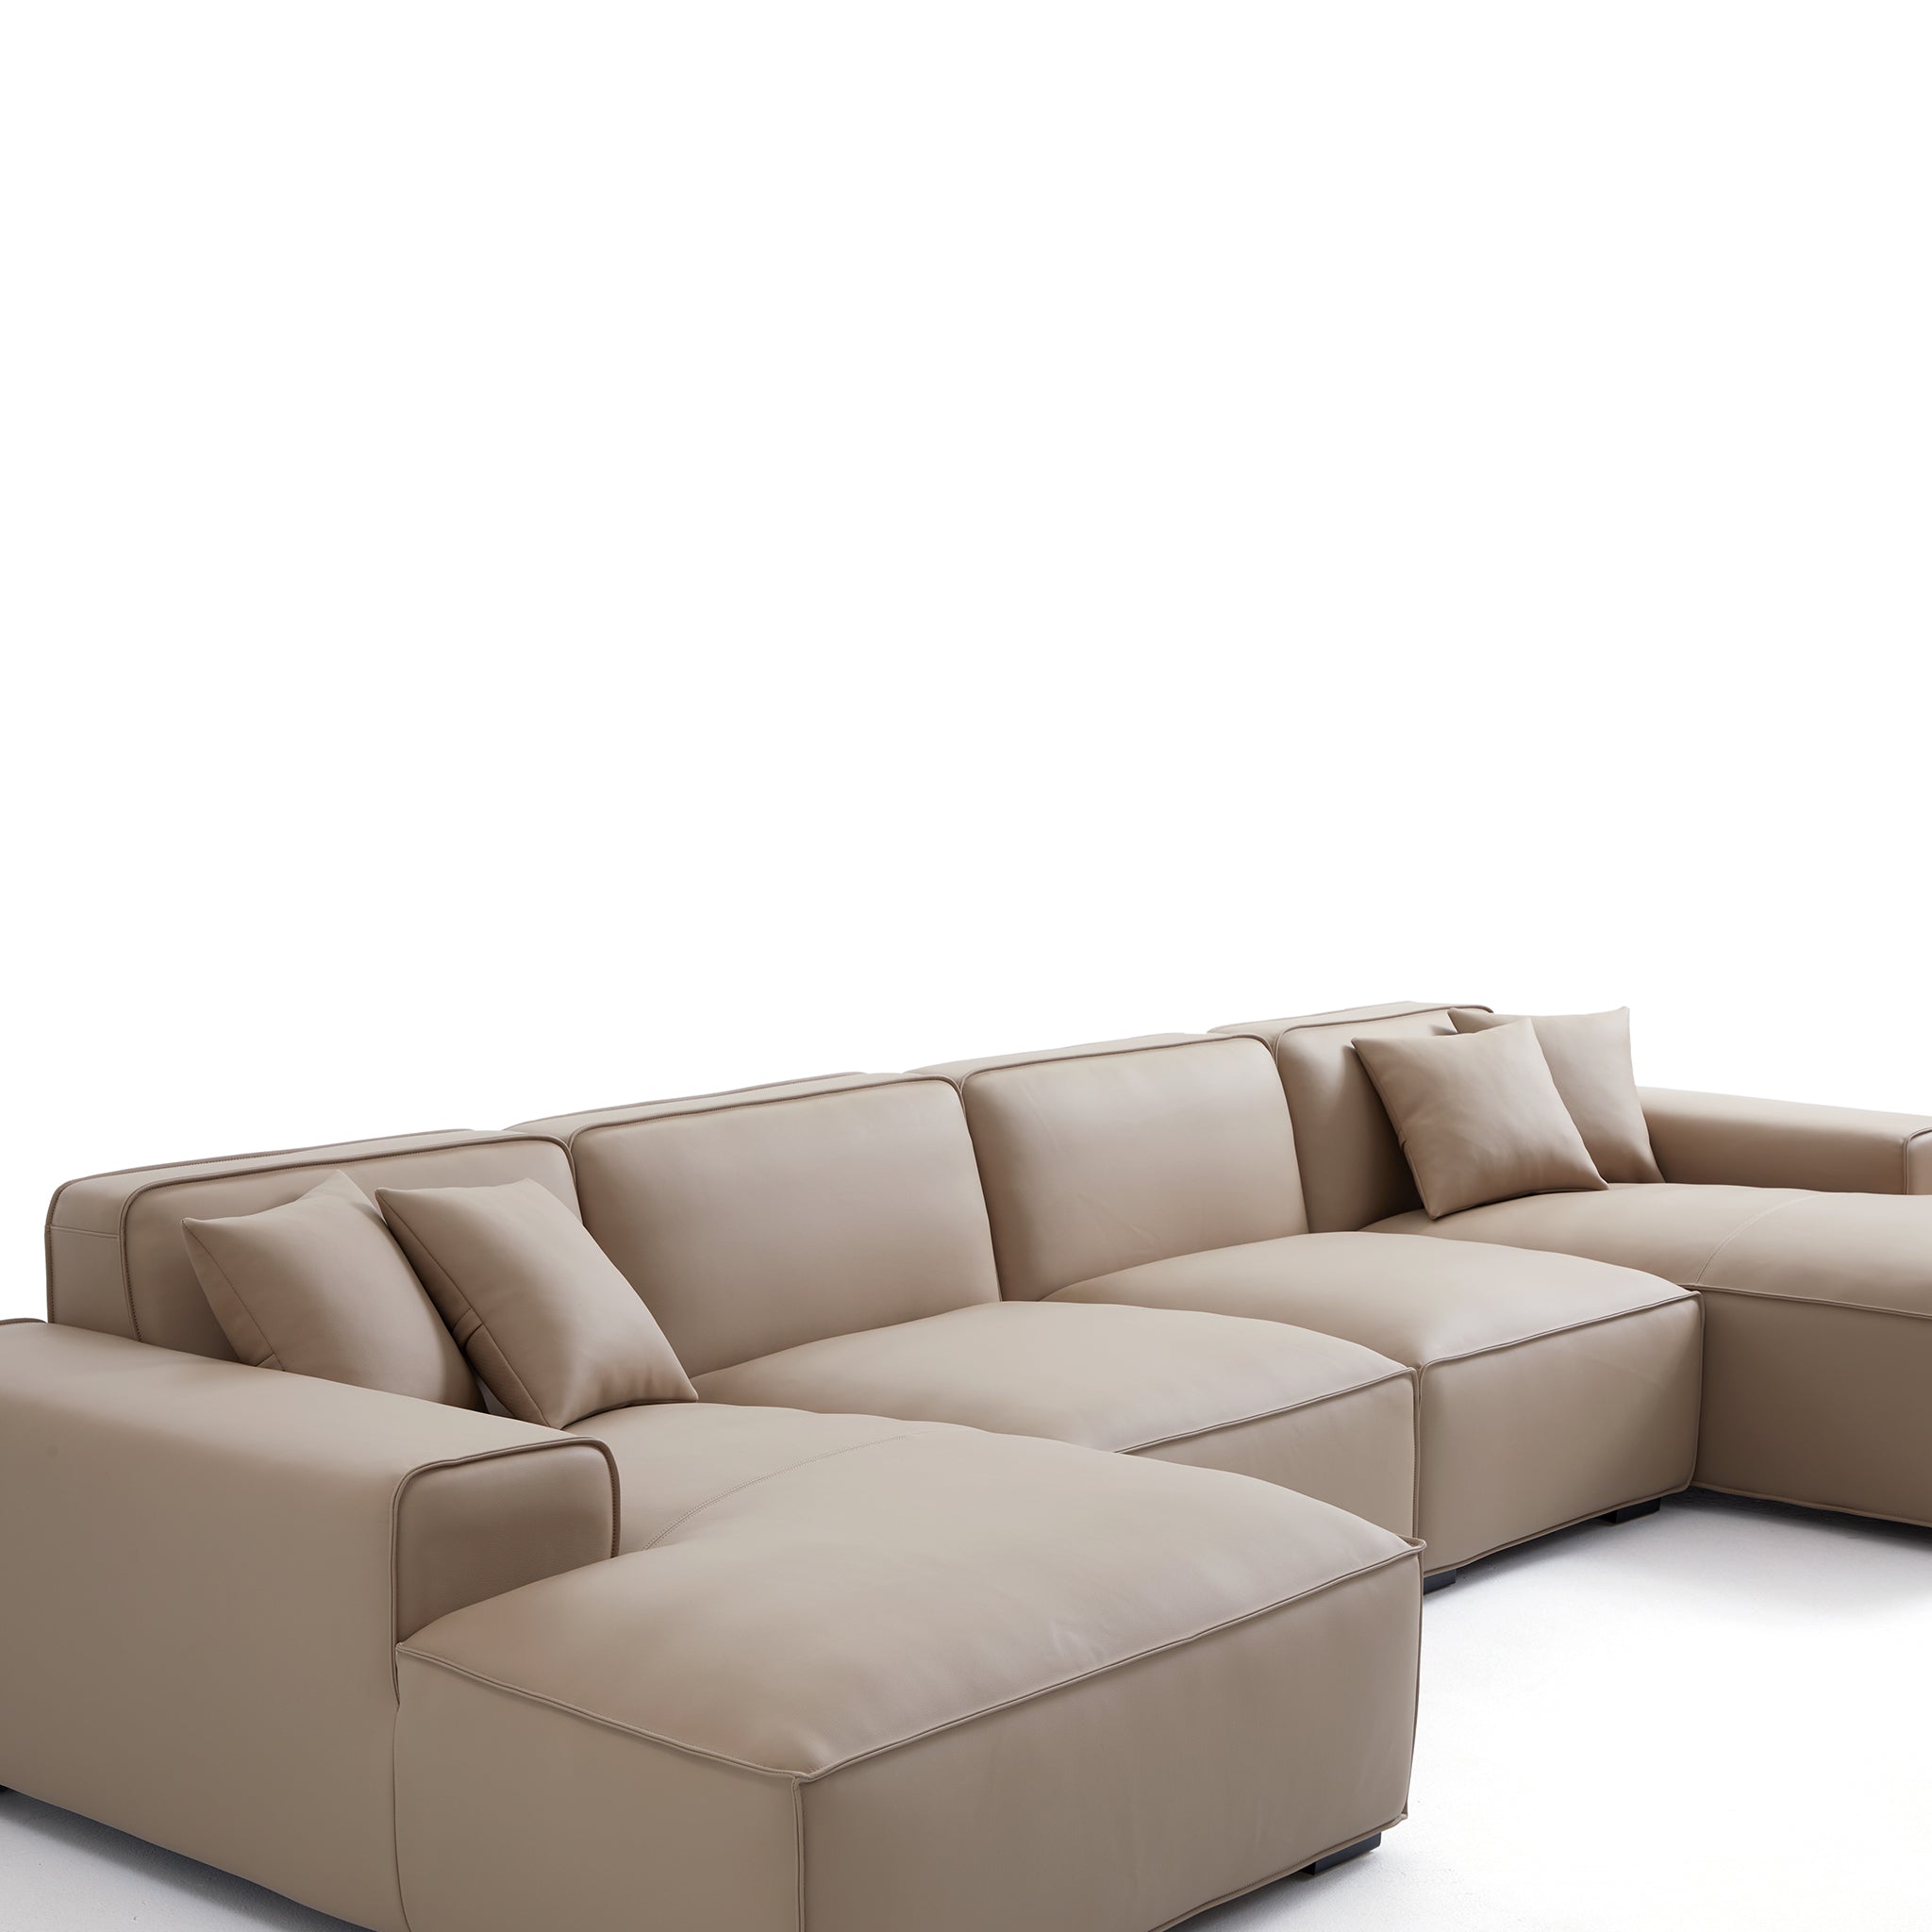 Domus Modular Khaki Leather U-Shaped Sectional Sofa